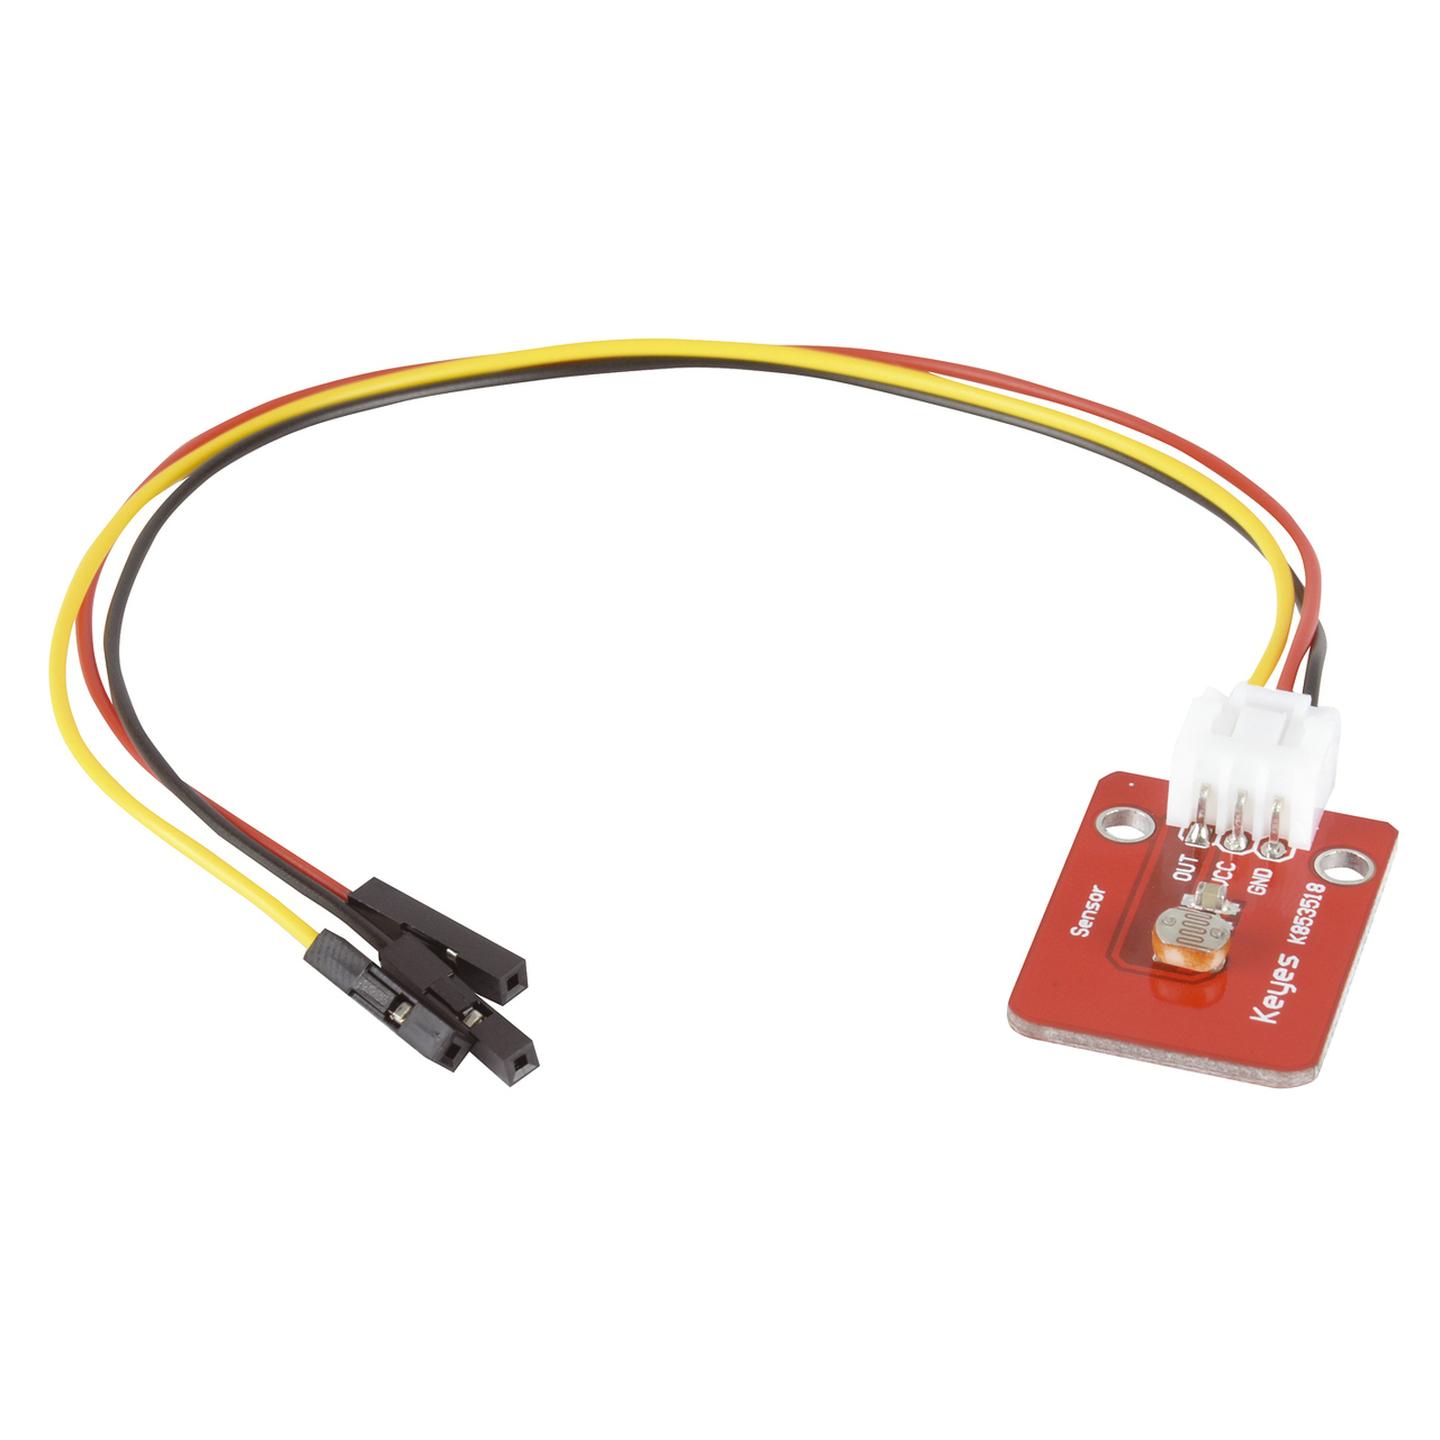 Duinotech Arduino Compatible Photosensitive LDR Sensor Module